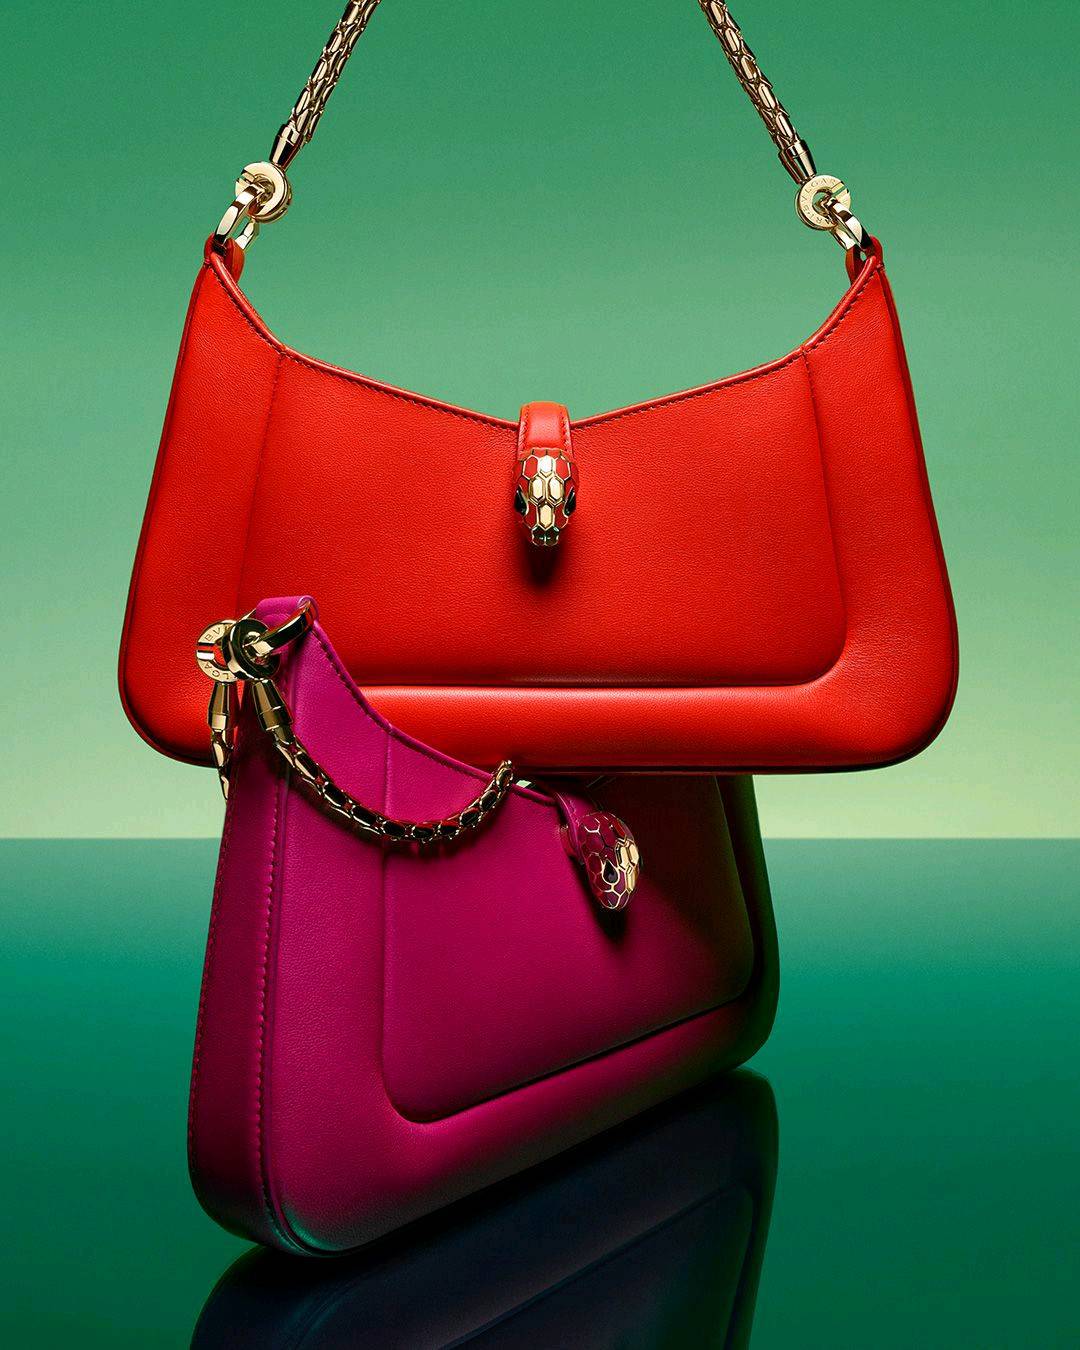 bulgari’s-new-kaleidoscopia-leather-goods-&-accessories-collection-–-bursting-with-the-colors-of-spring.-|-senatus